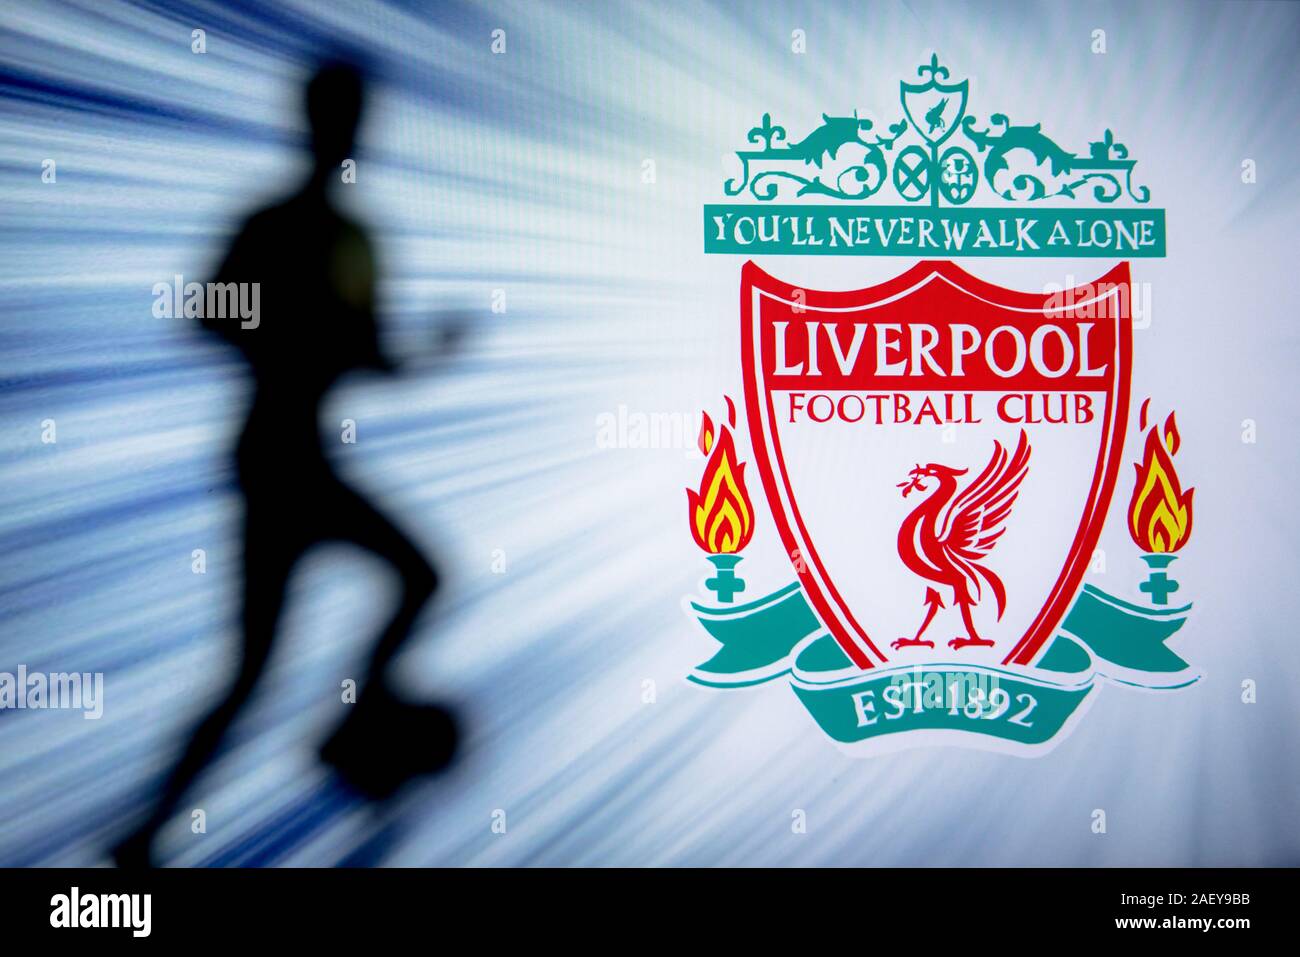 LIVERPOOL, ENGLAND, JULY. 1. 2019: Liverpool Football club logo, Premier League, England. Soccer player silhouette. Stock Photo